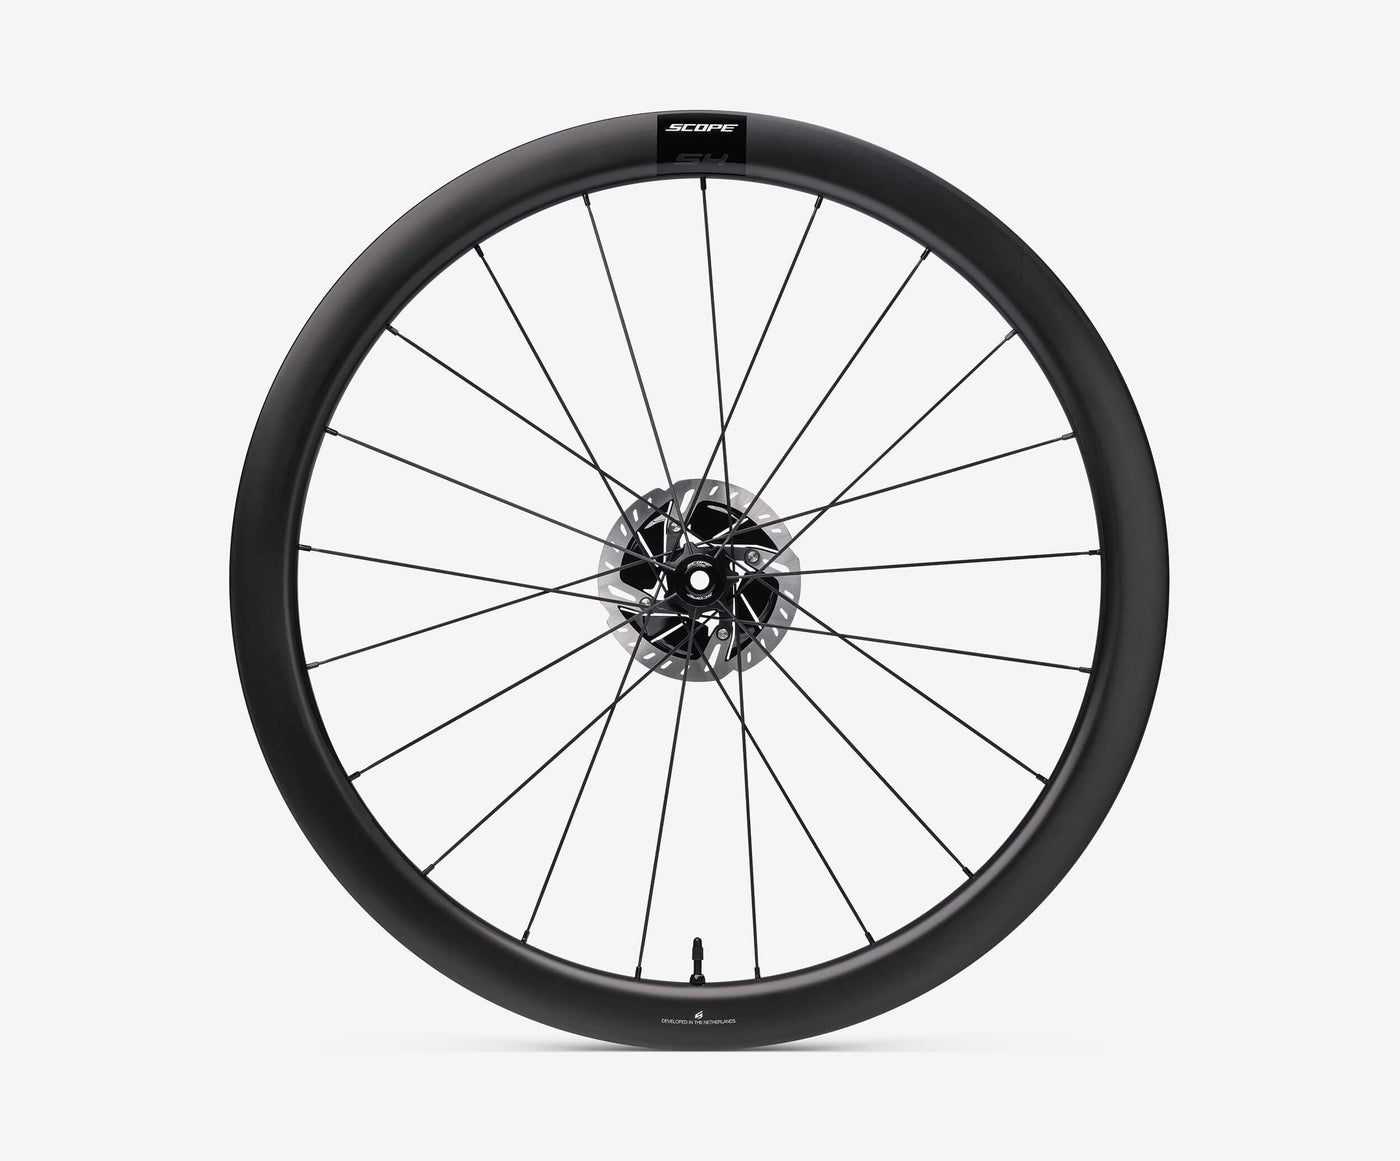 Scope S4 All-Rounder Carbon Tubeless Disc Brake Wheel - Shimano/Sram (Black)